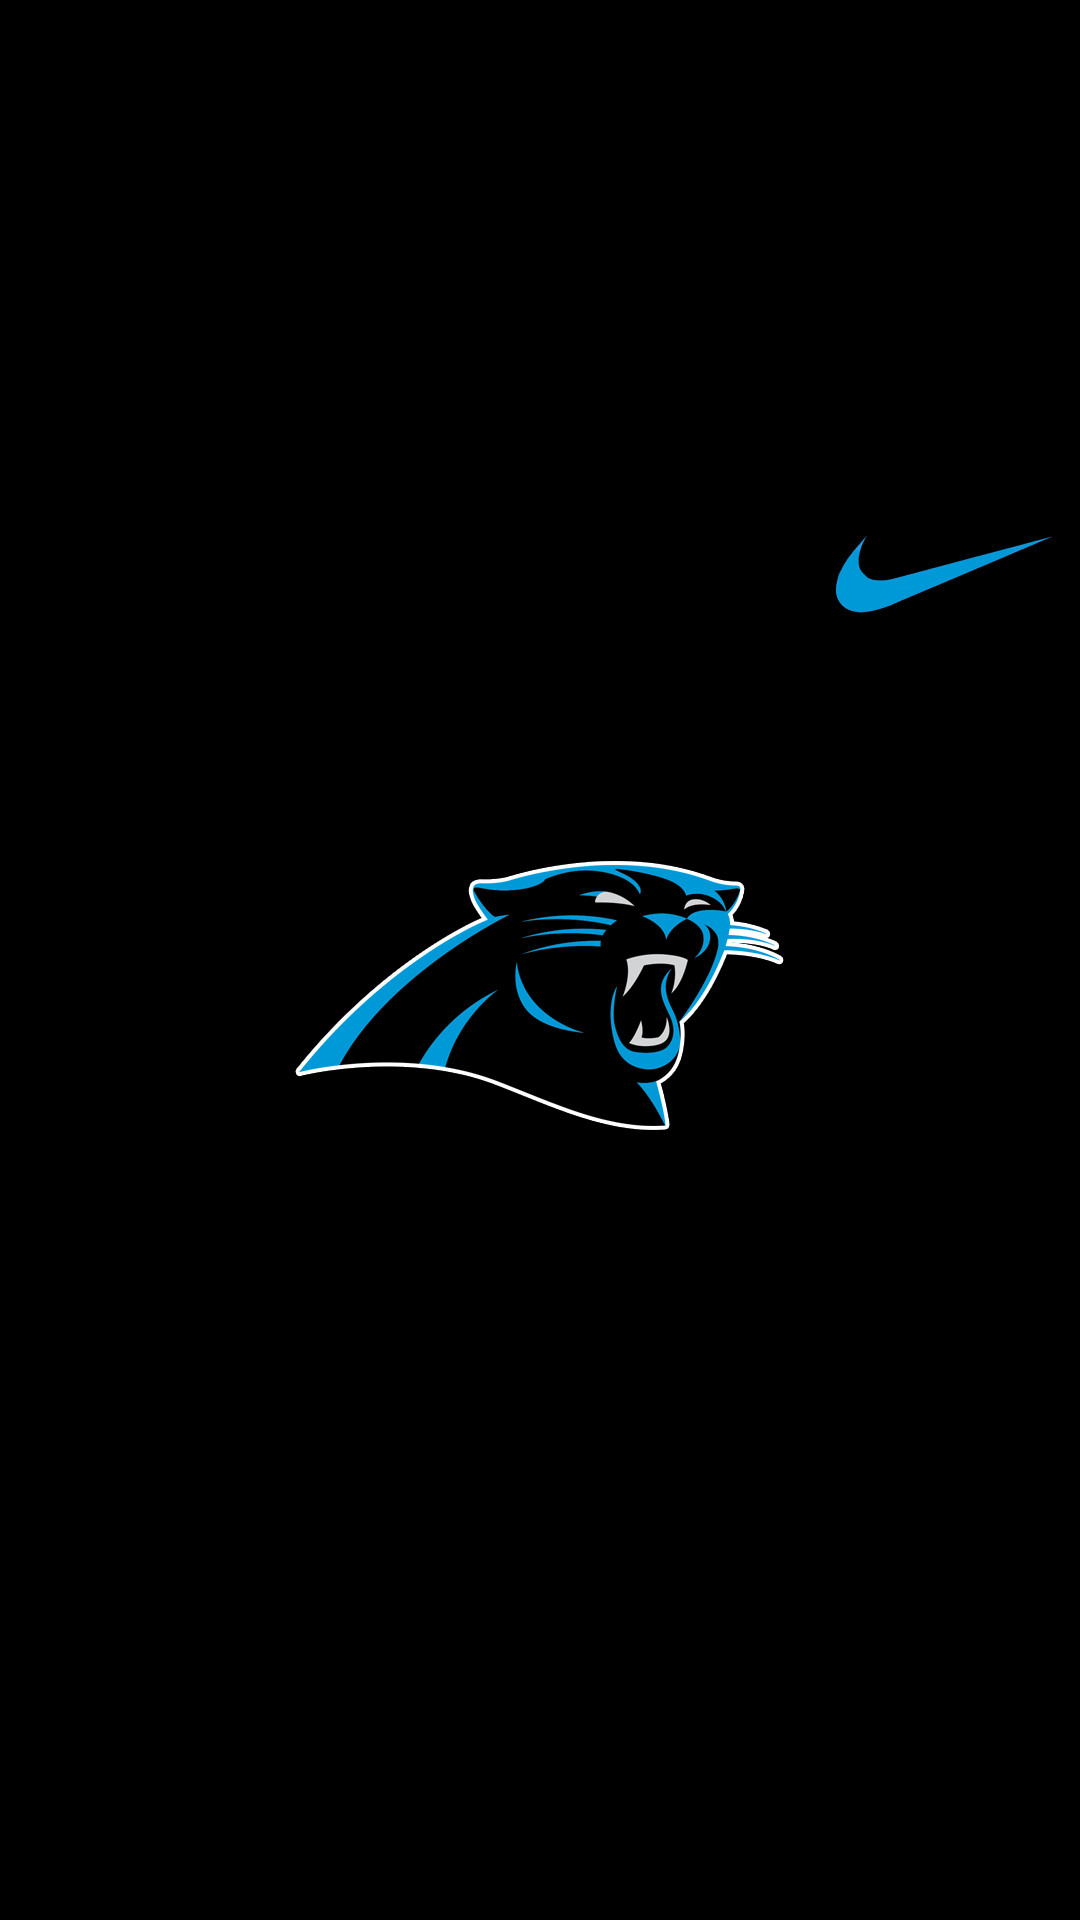 1080x1920 Carolina Panthers Nike 1080.png